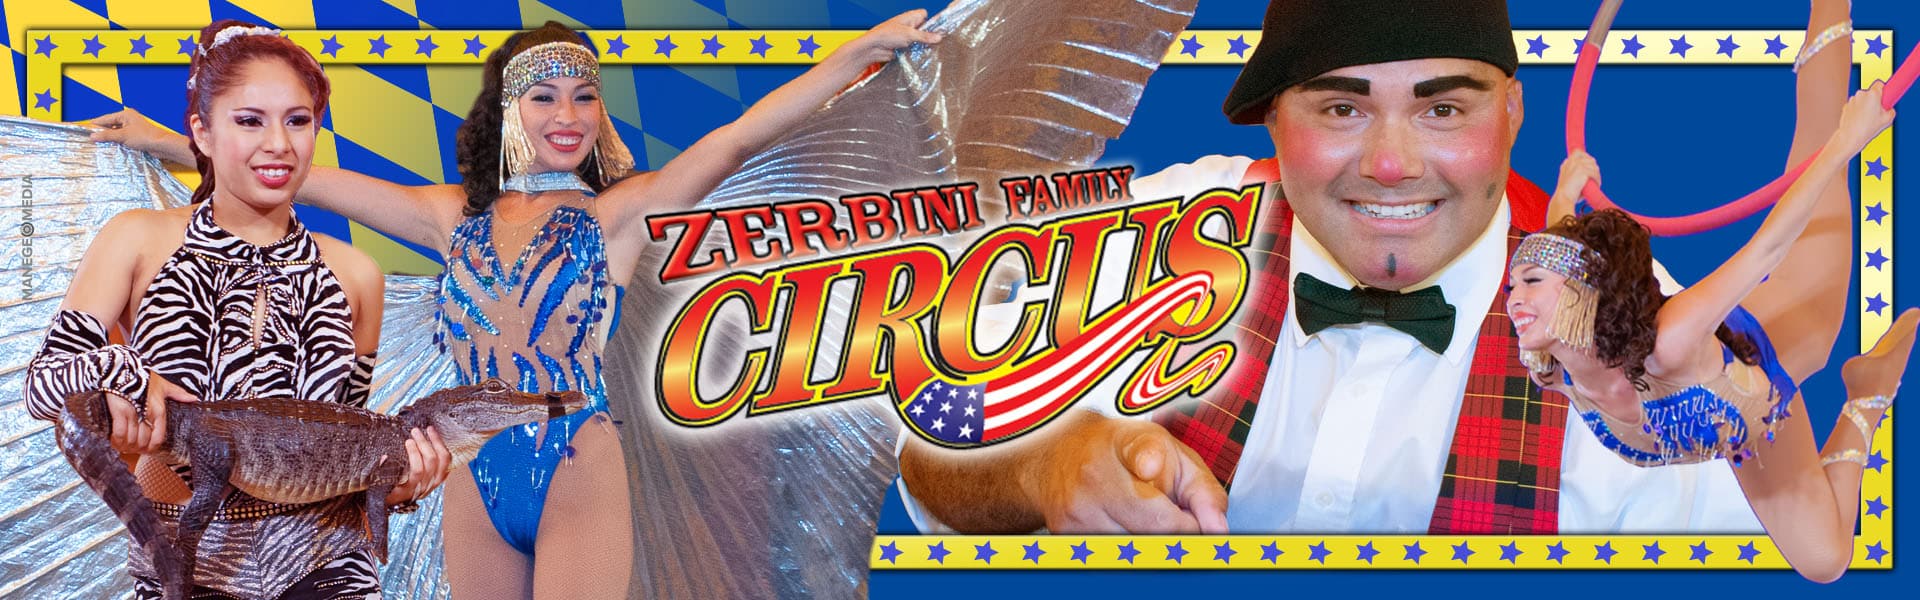 Calendar Zerbini Family Circus